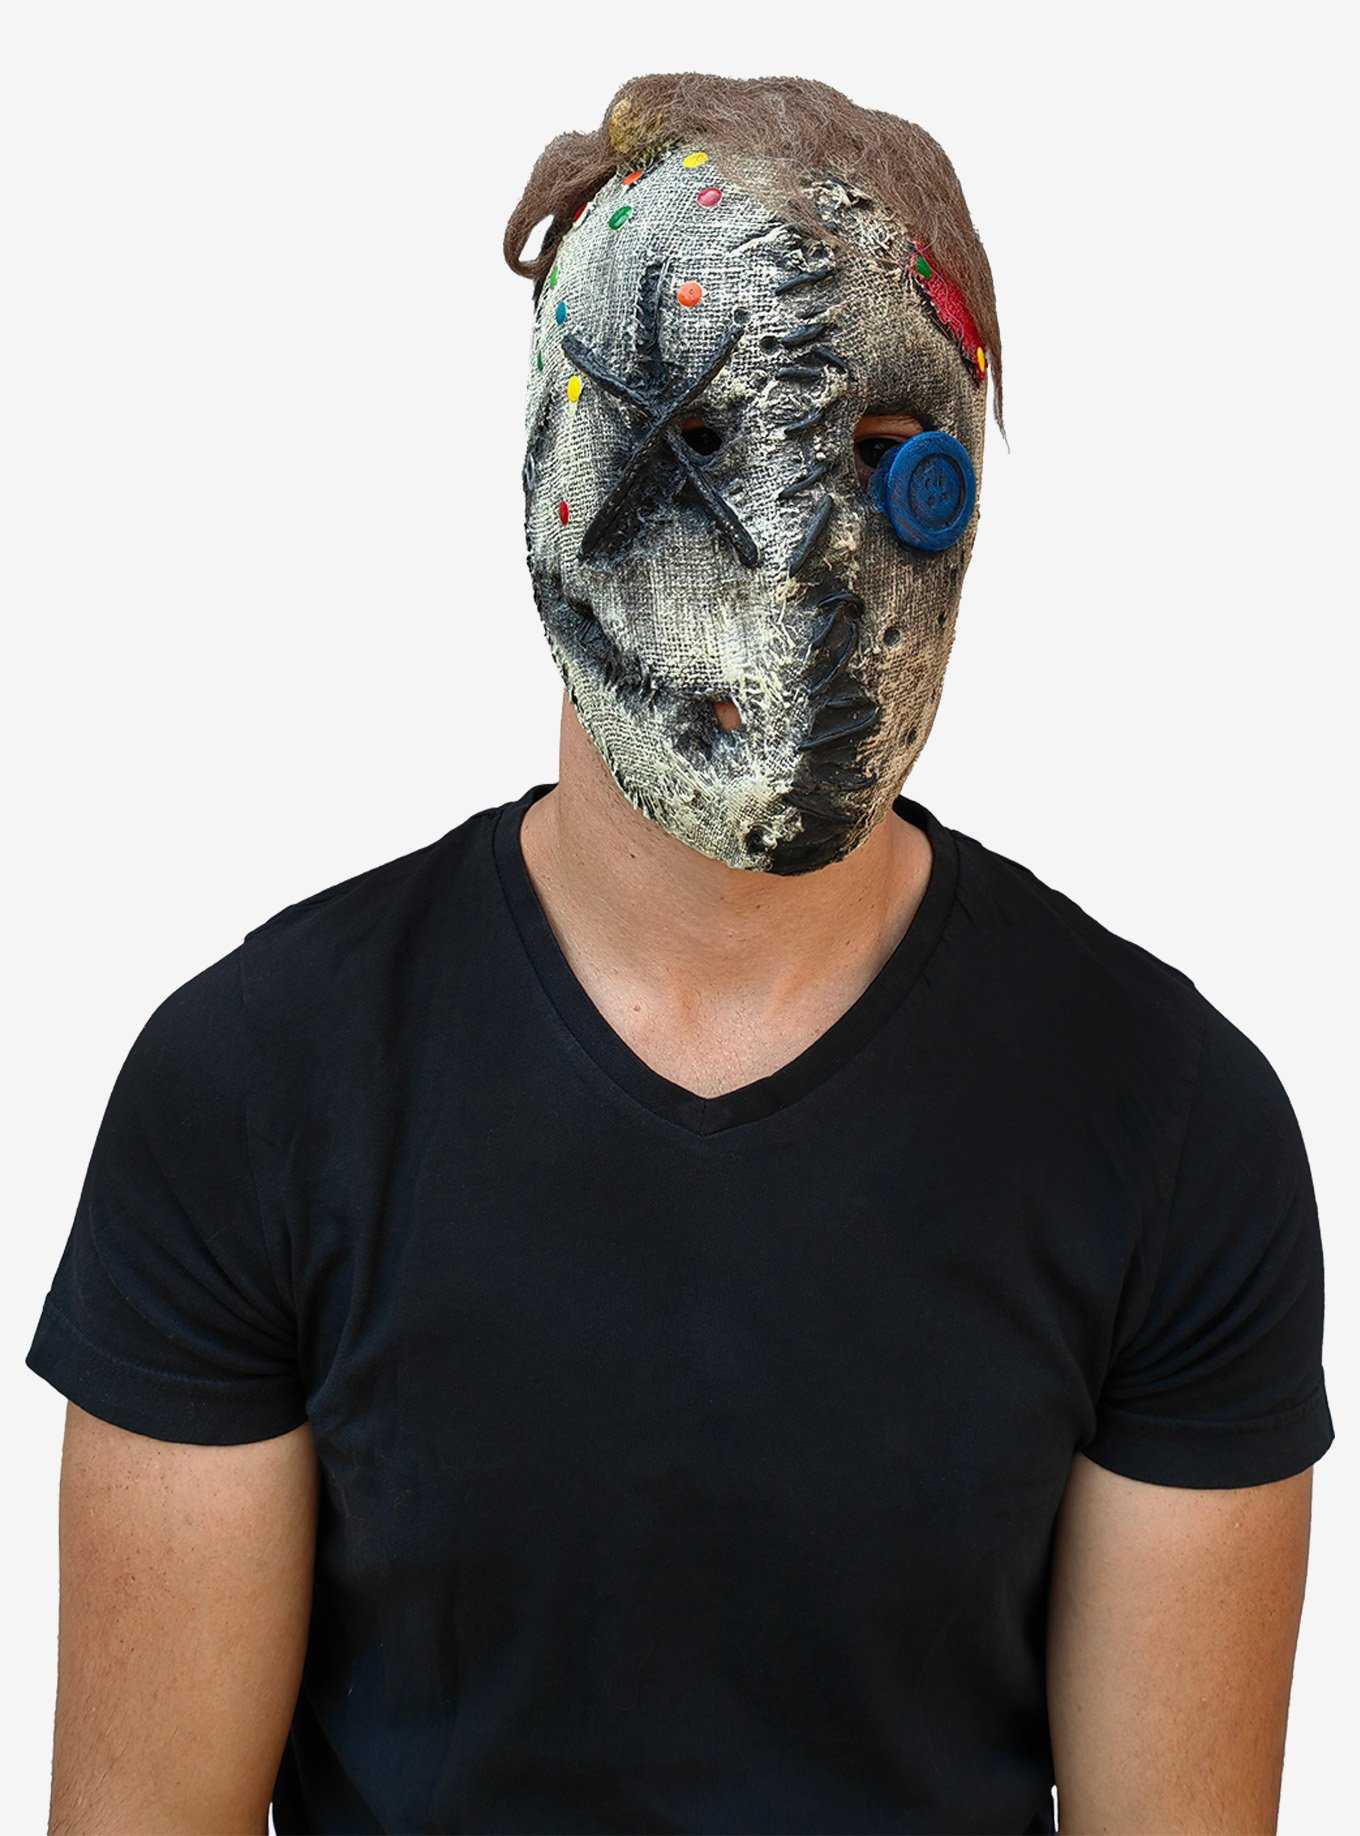 Call of Duty Costume Masks & Eye Masks for sale